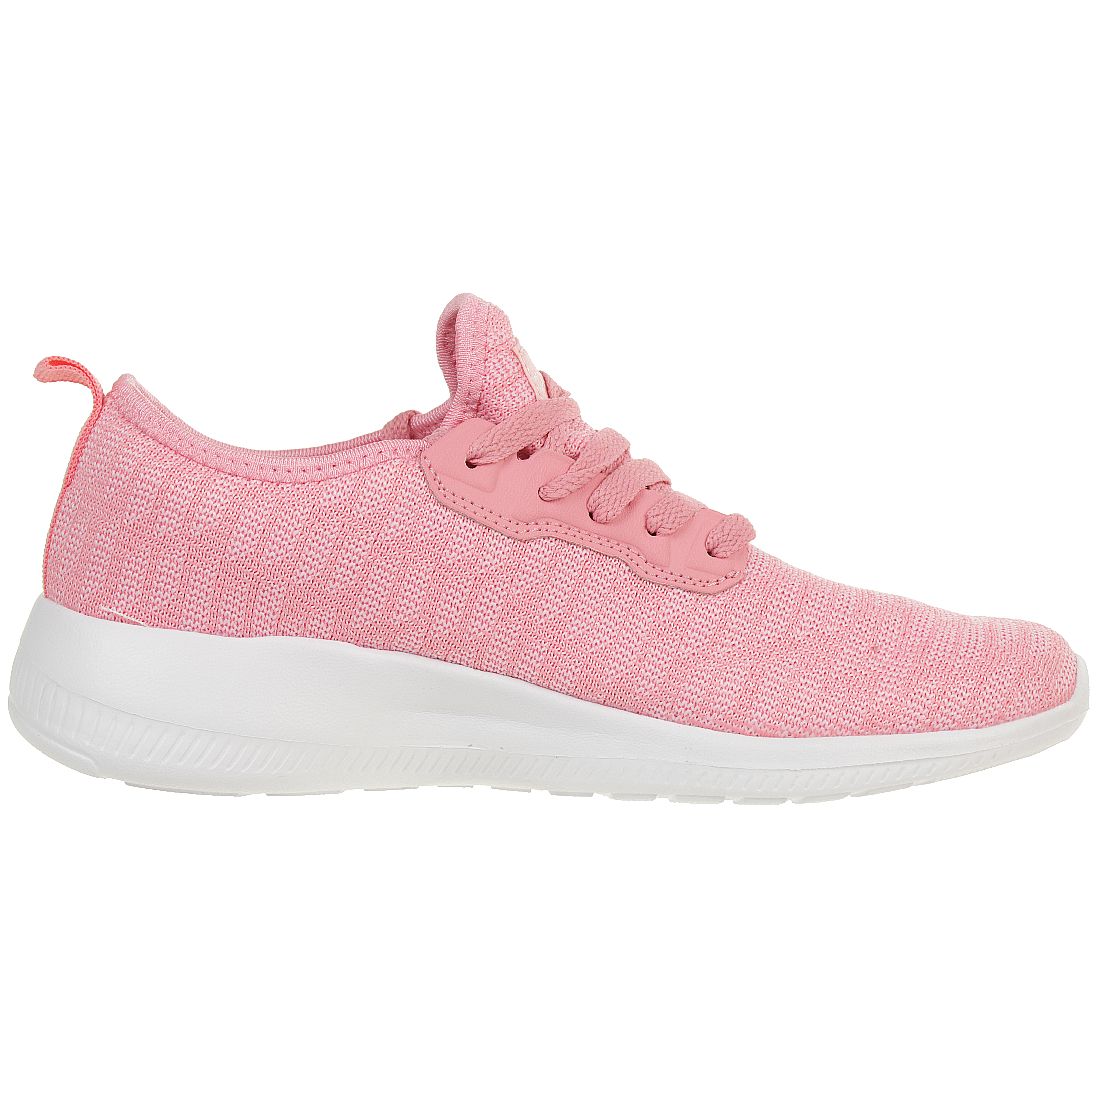 Kappa 242353 Sneaker Damen Turnschuhe Schuhe pink